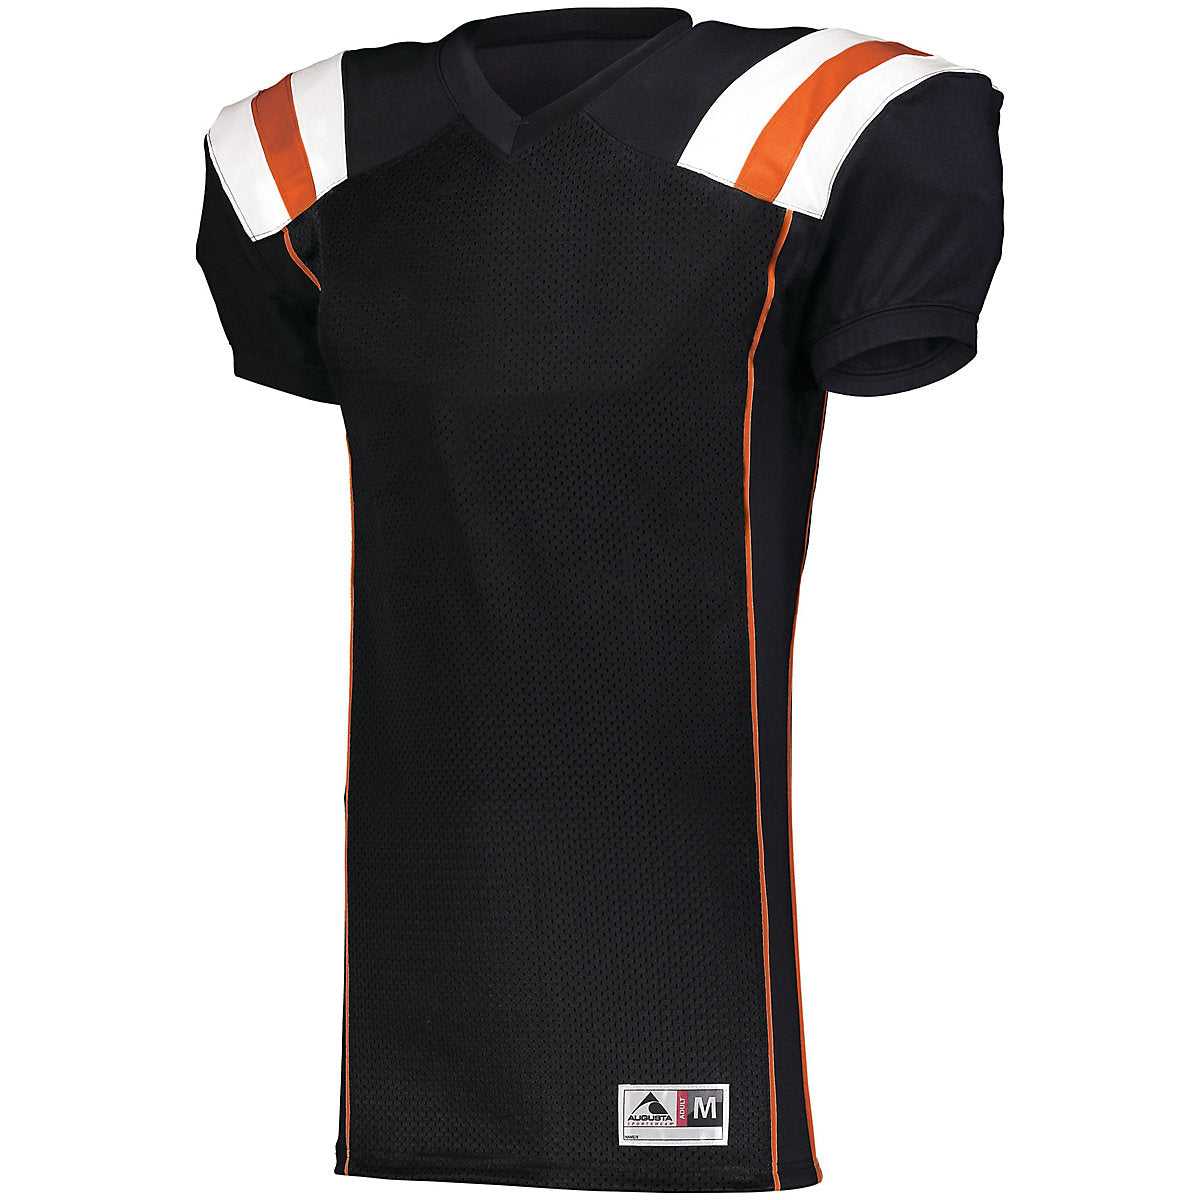 Augusta 9580 Tform Football Jersey - Black Orange White - HIT a Double